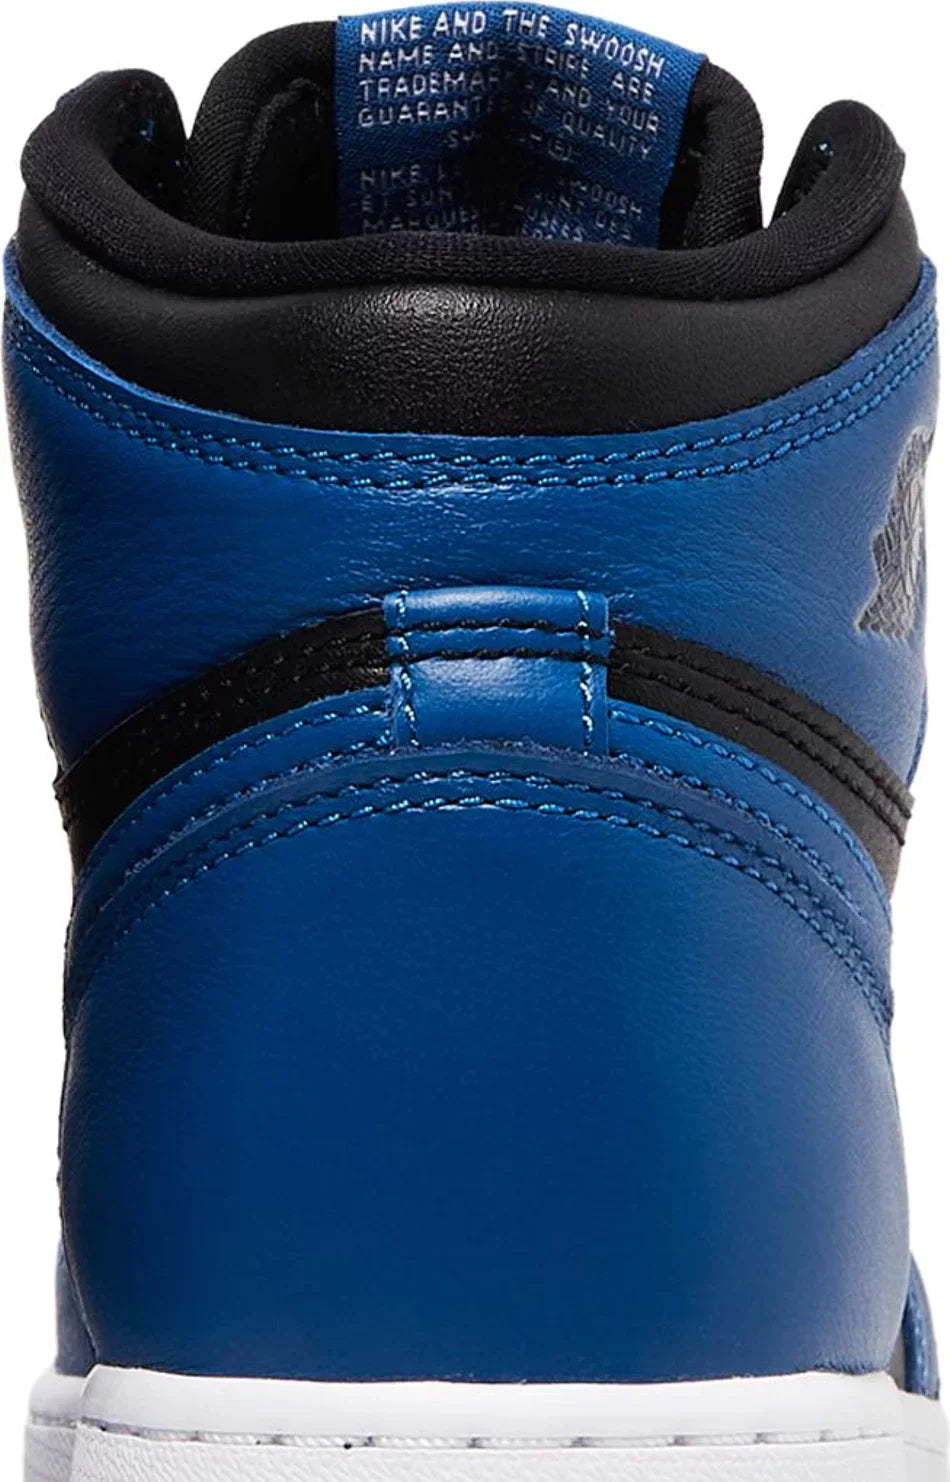 Nike 1 Retro High OG Dark Marina Blue (GS)